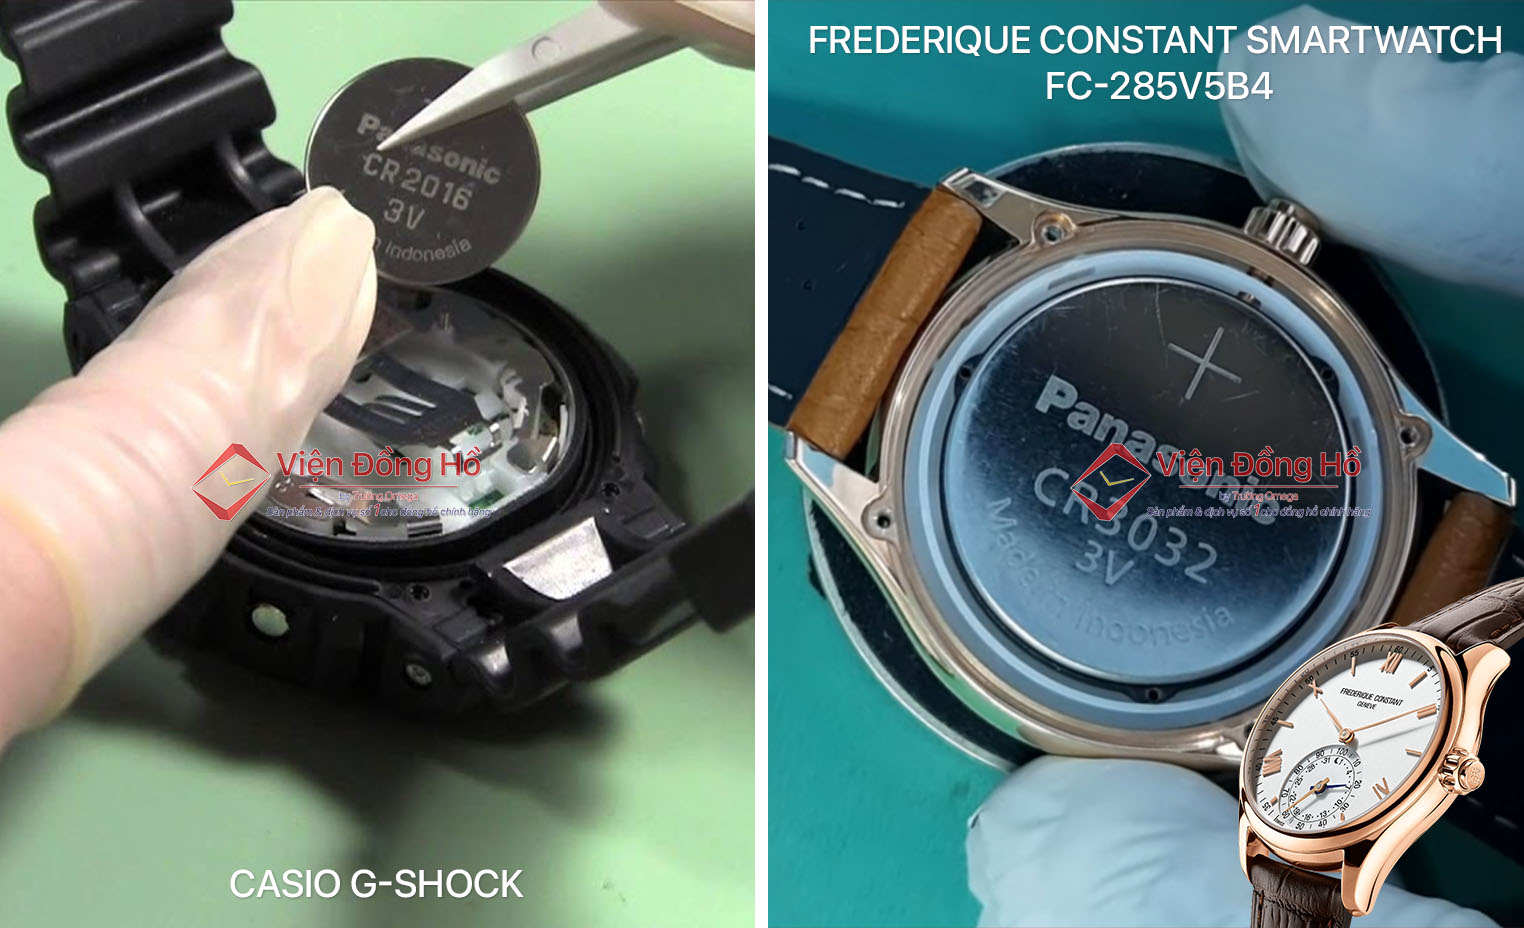 Thay pin Lithium cho đồng hồ Casio và Frederique Constant (FC)